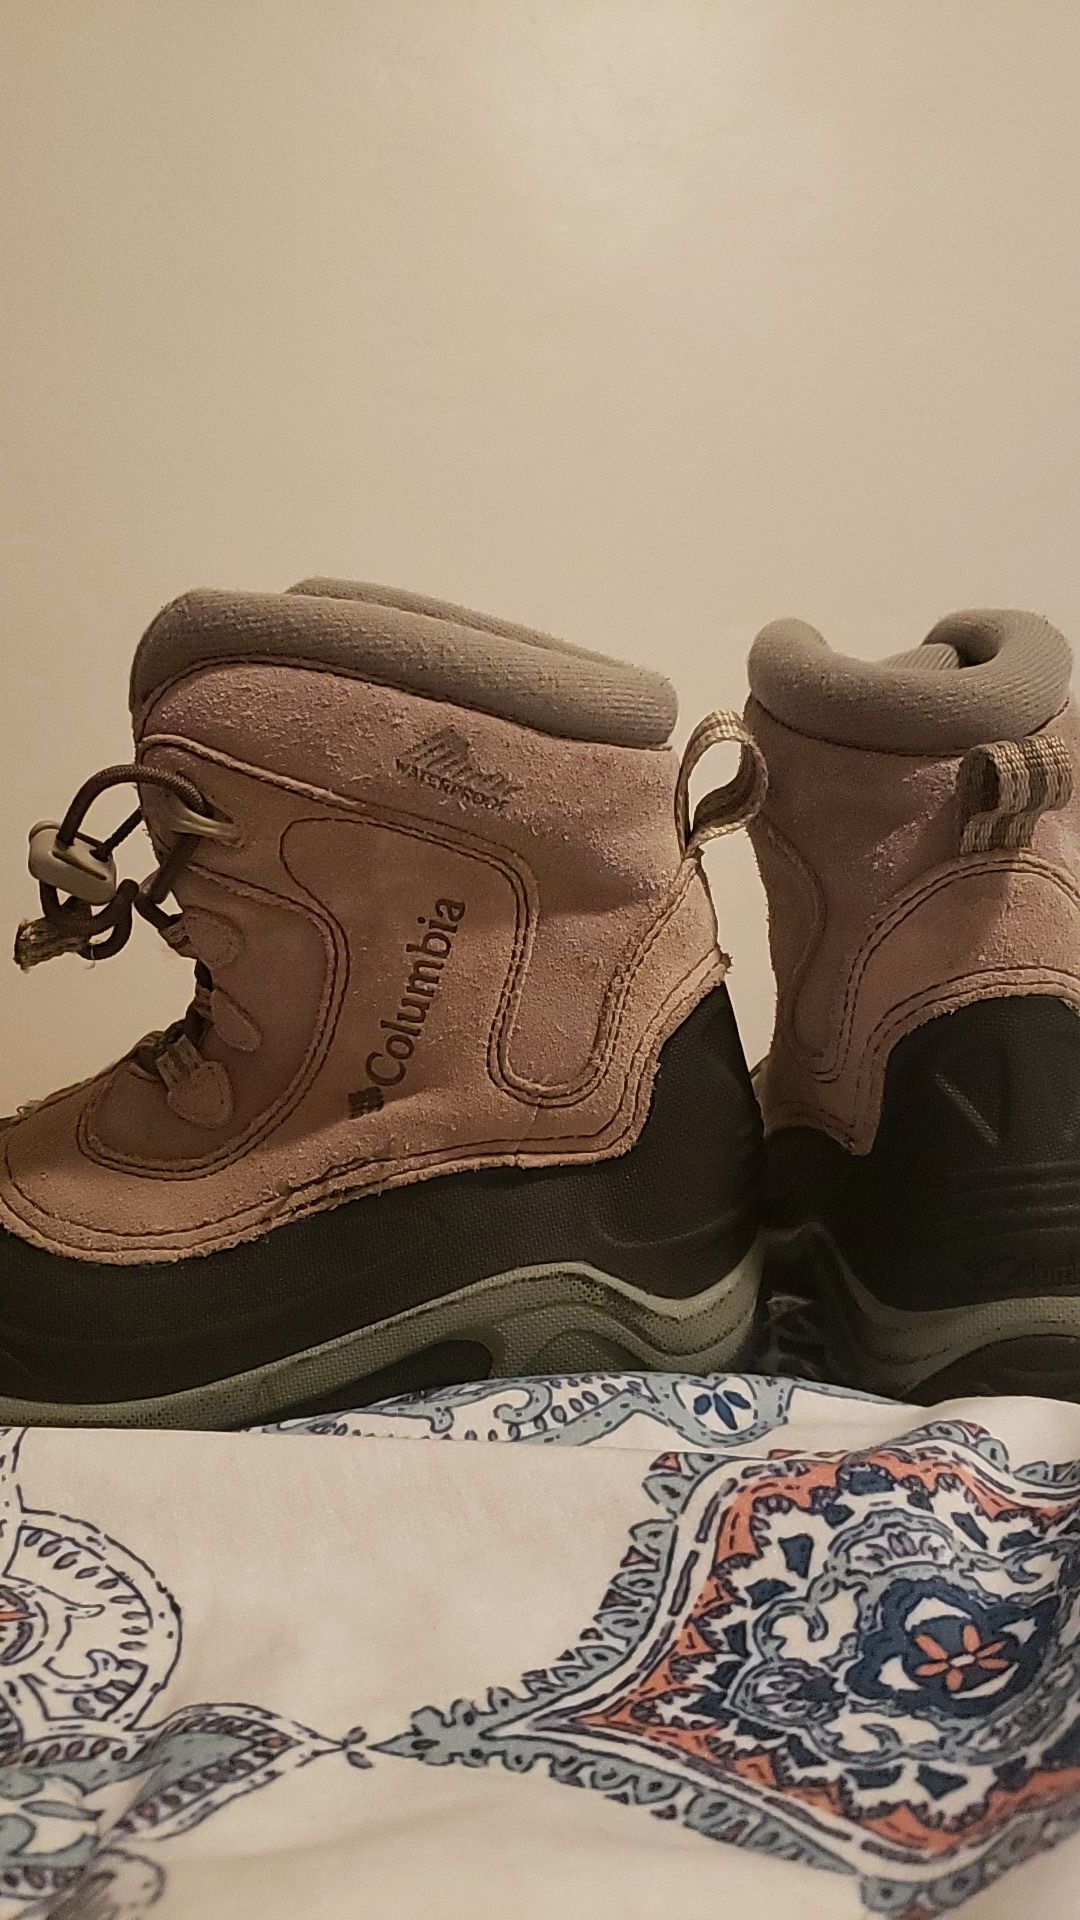 Hiking/rain boots size 2